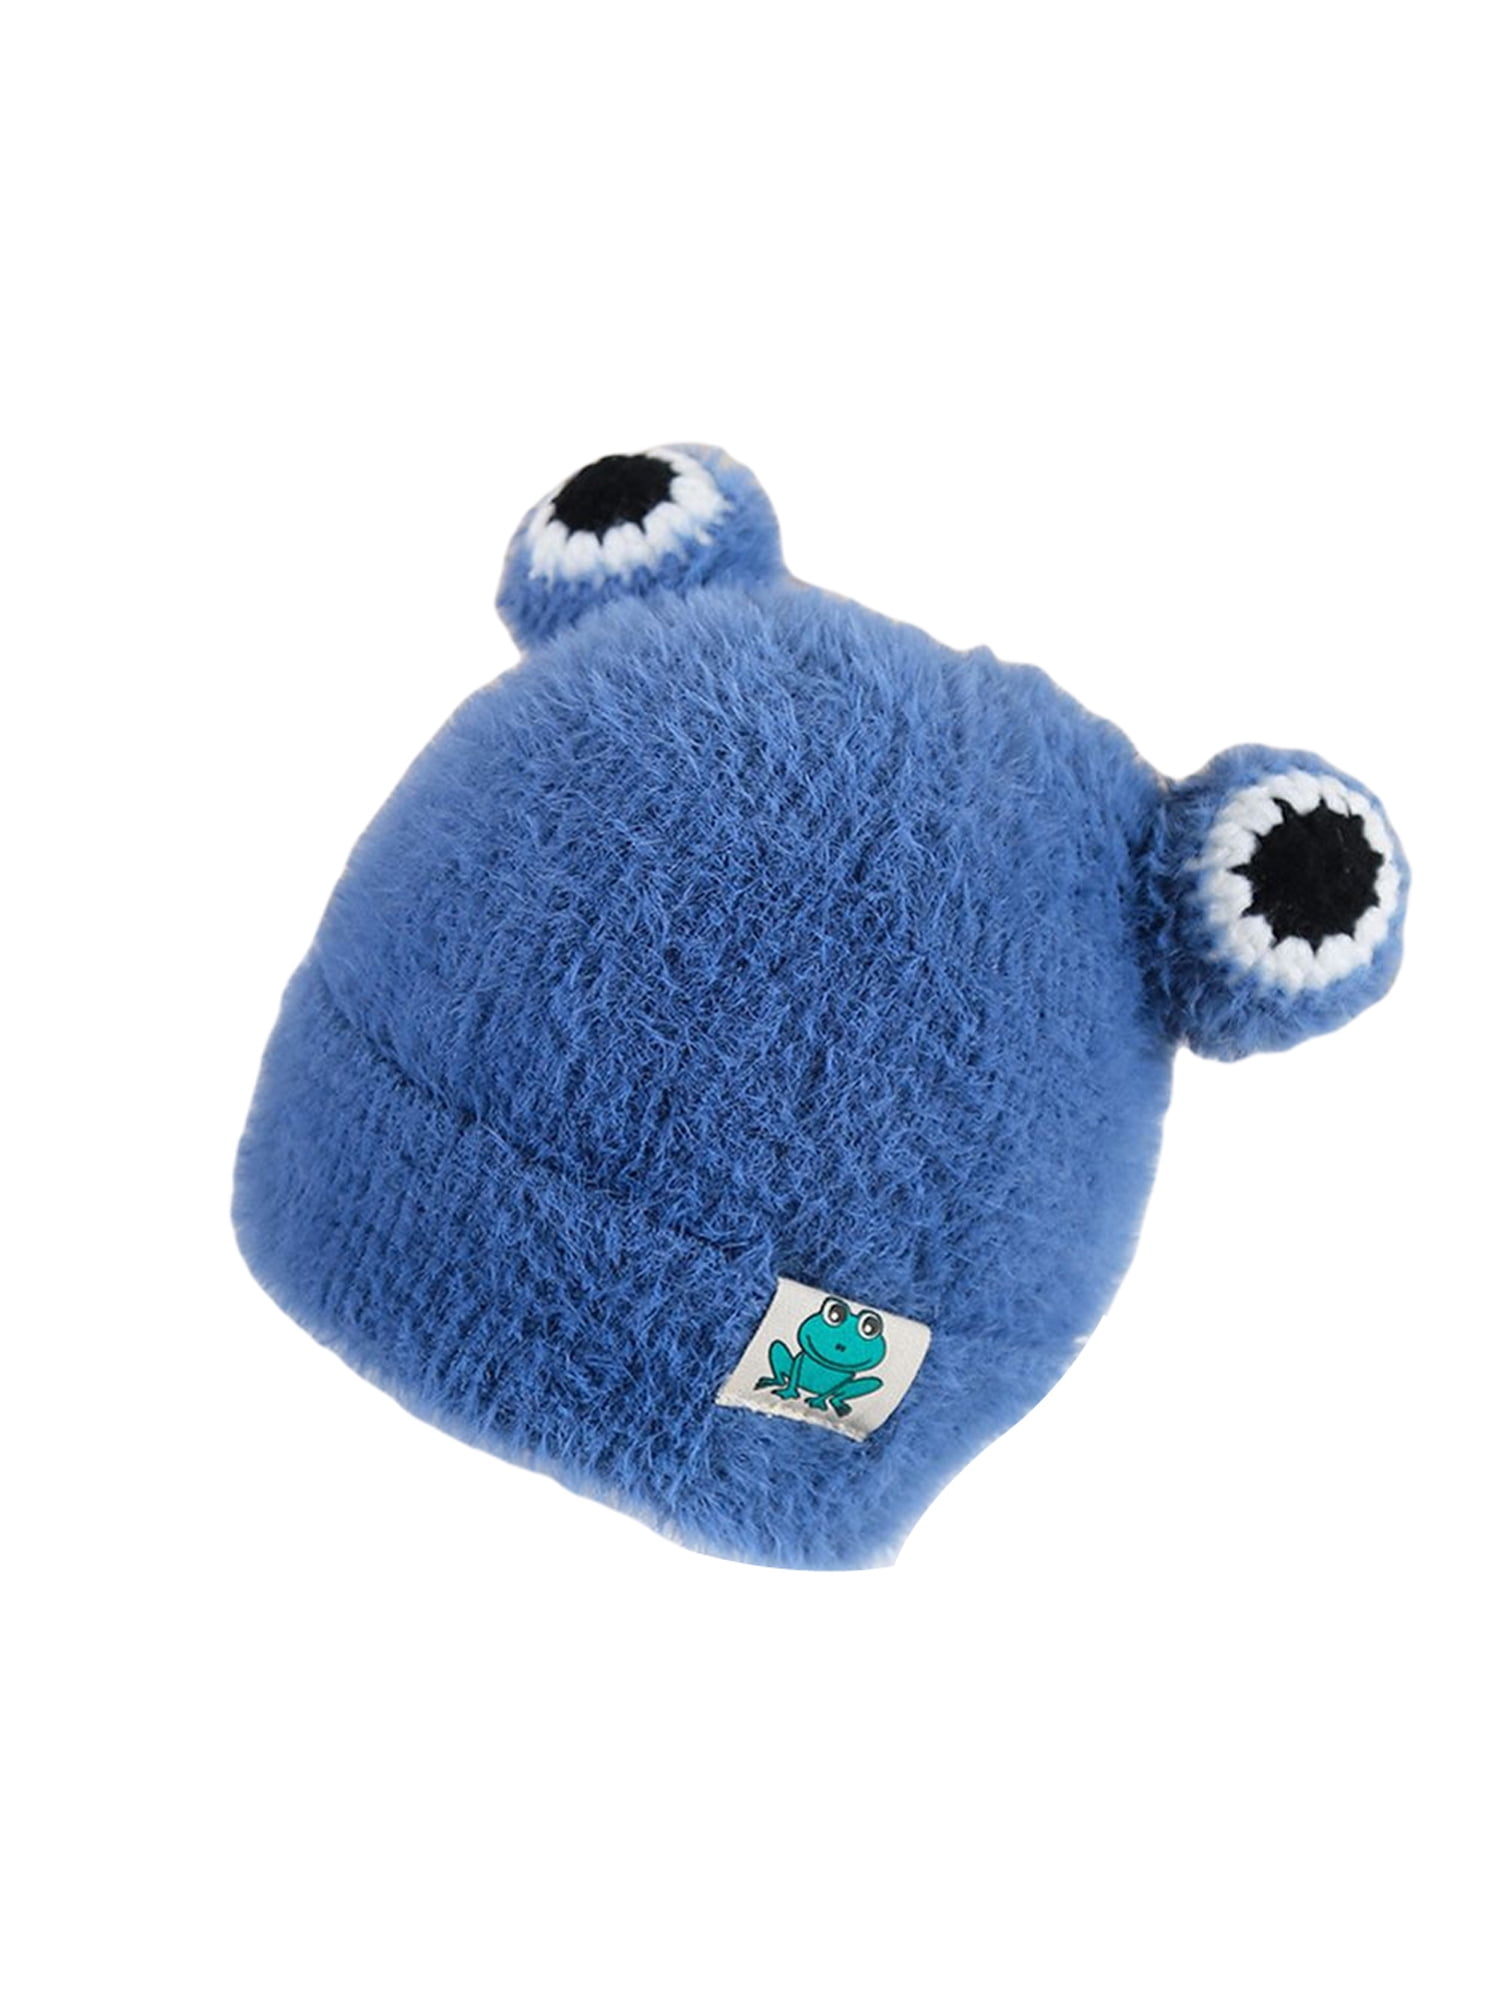 Cute Plush Hat Cartoon Frog Winter Ski Cap for Toddler Kids Baby Boys Girls New